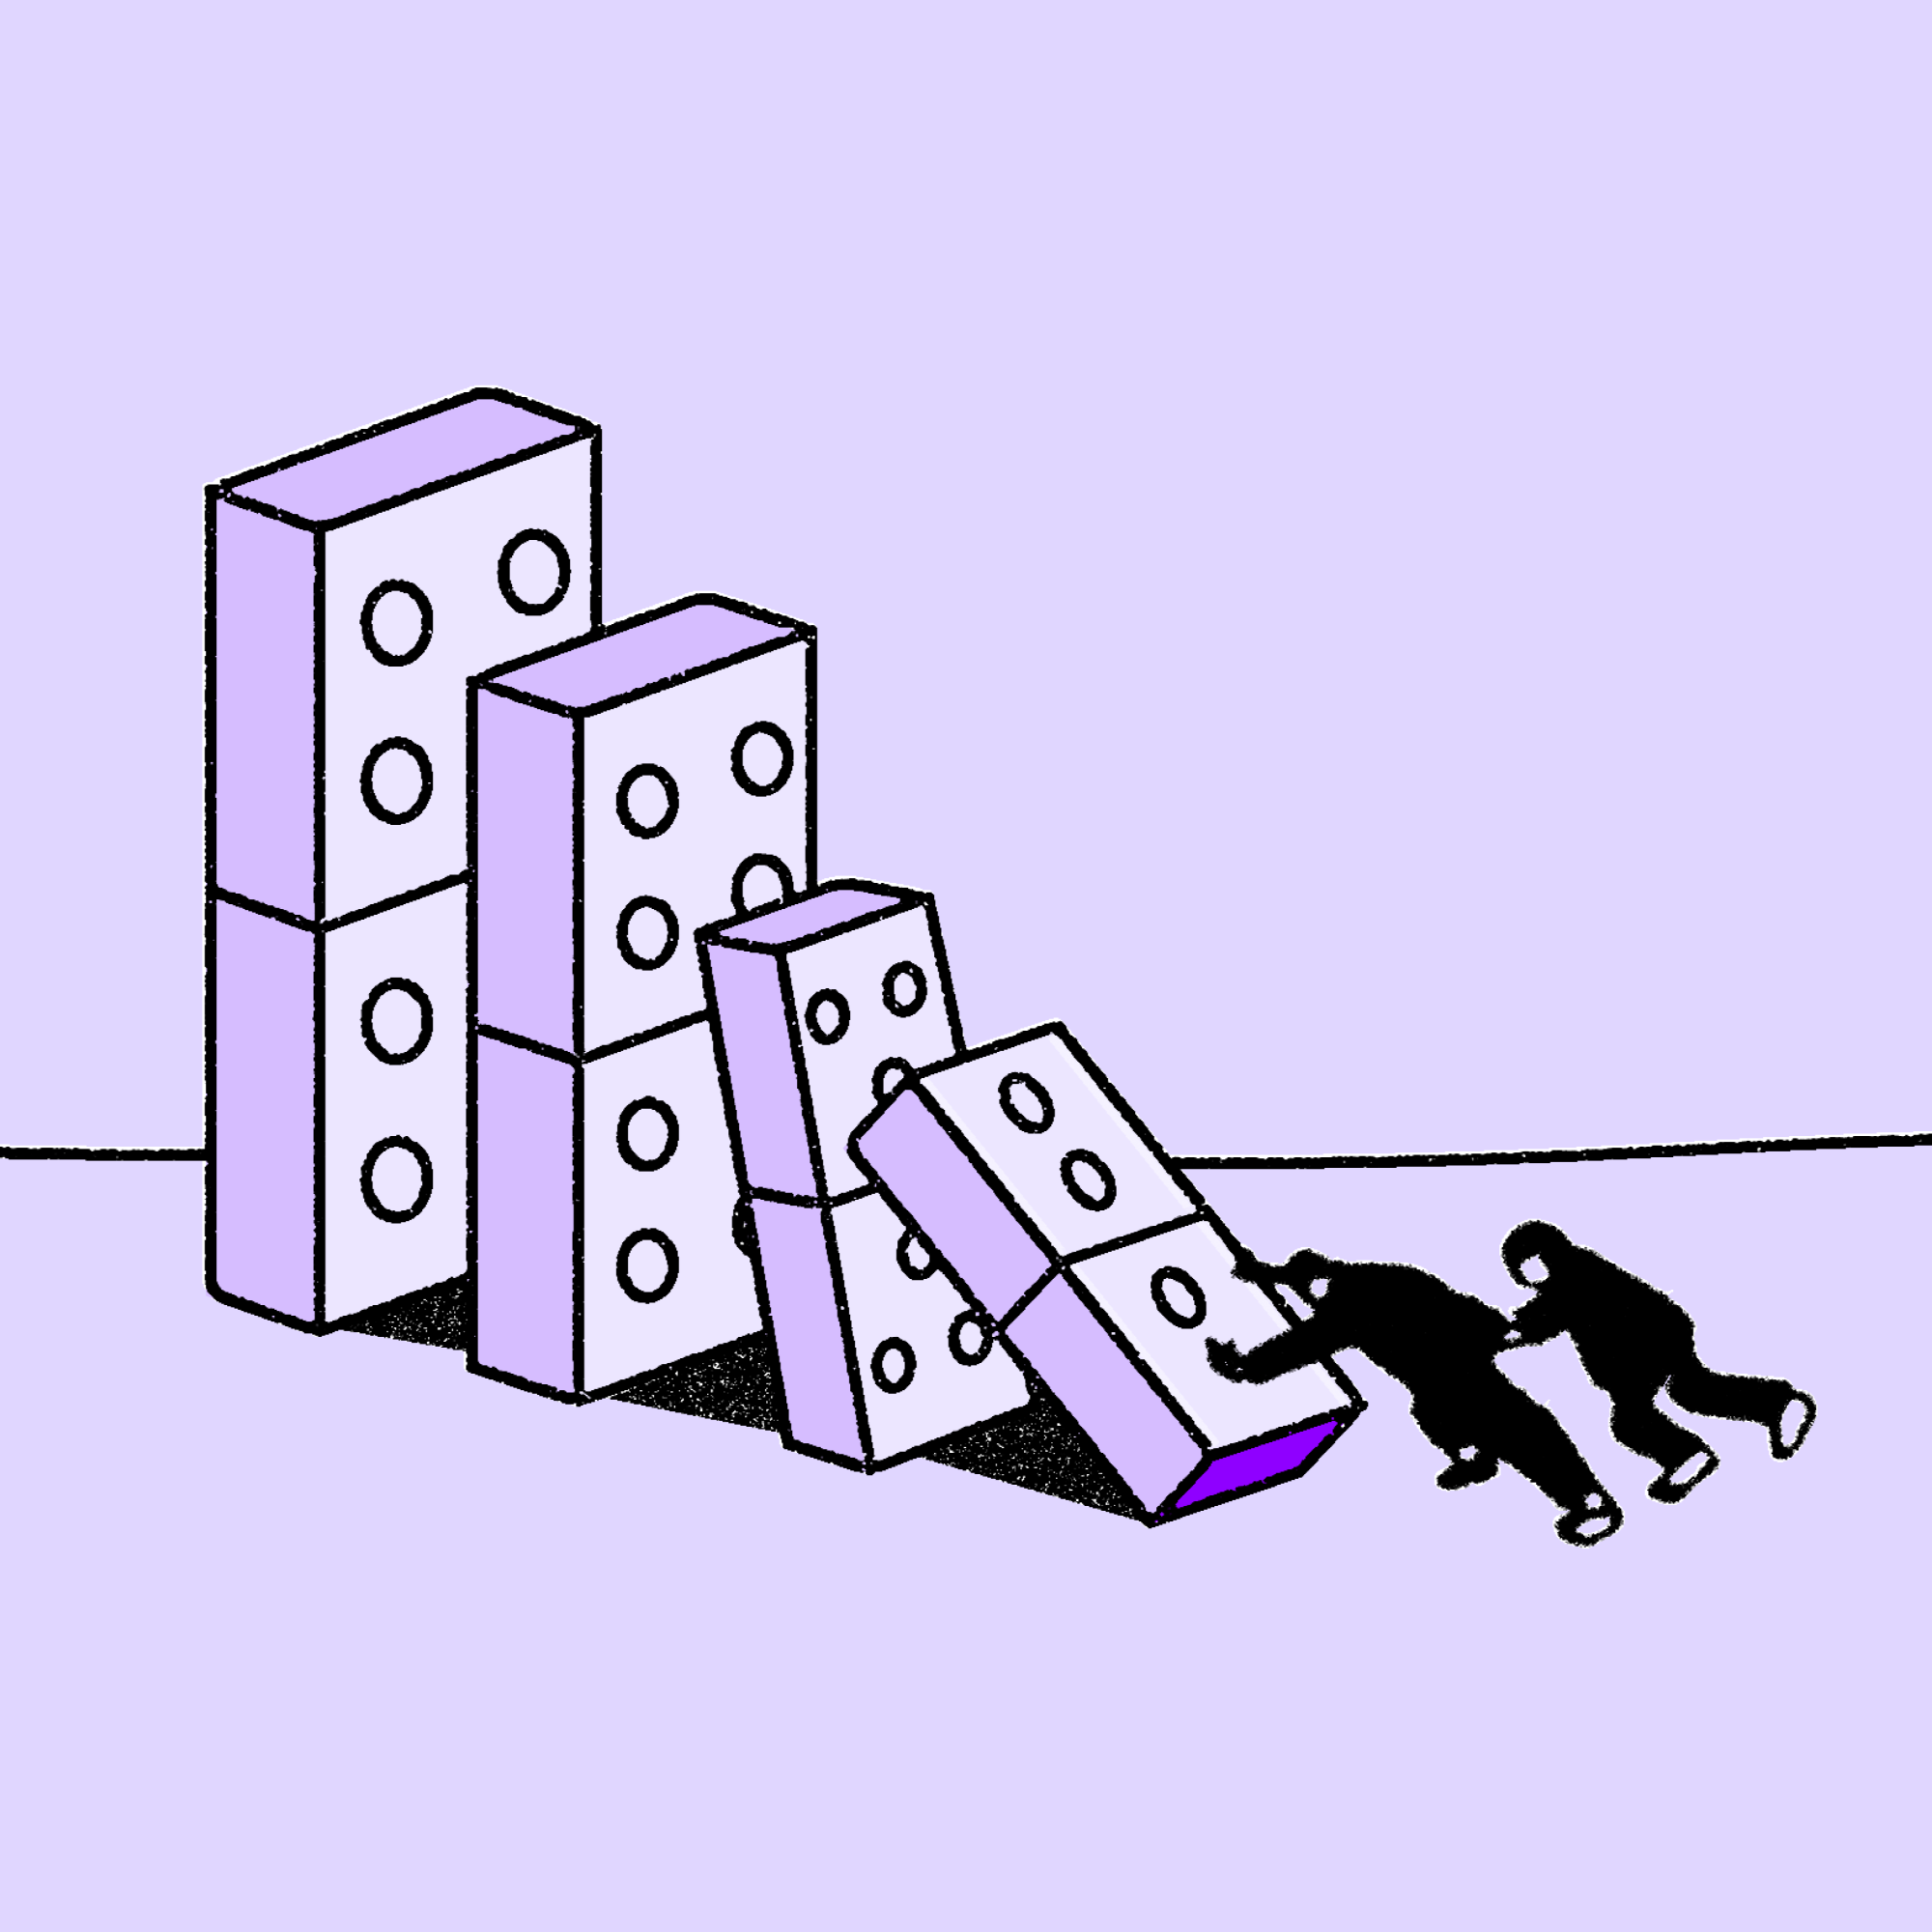 Square dominoes on light purple